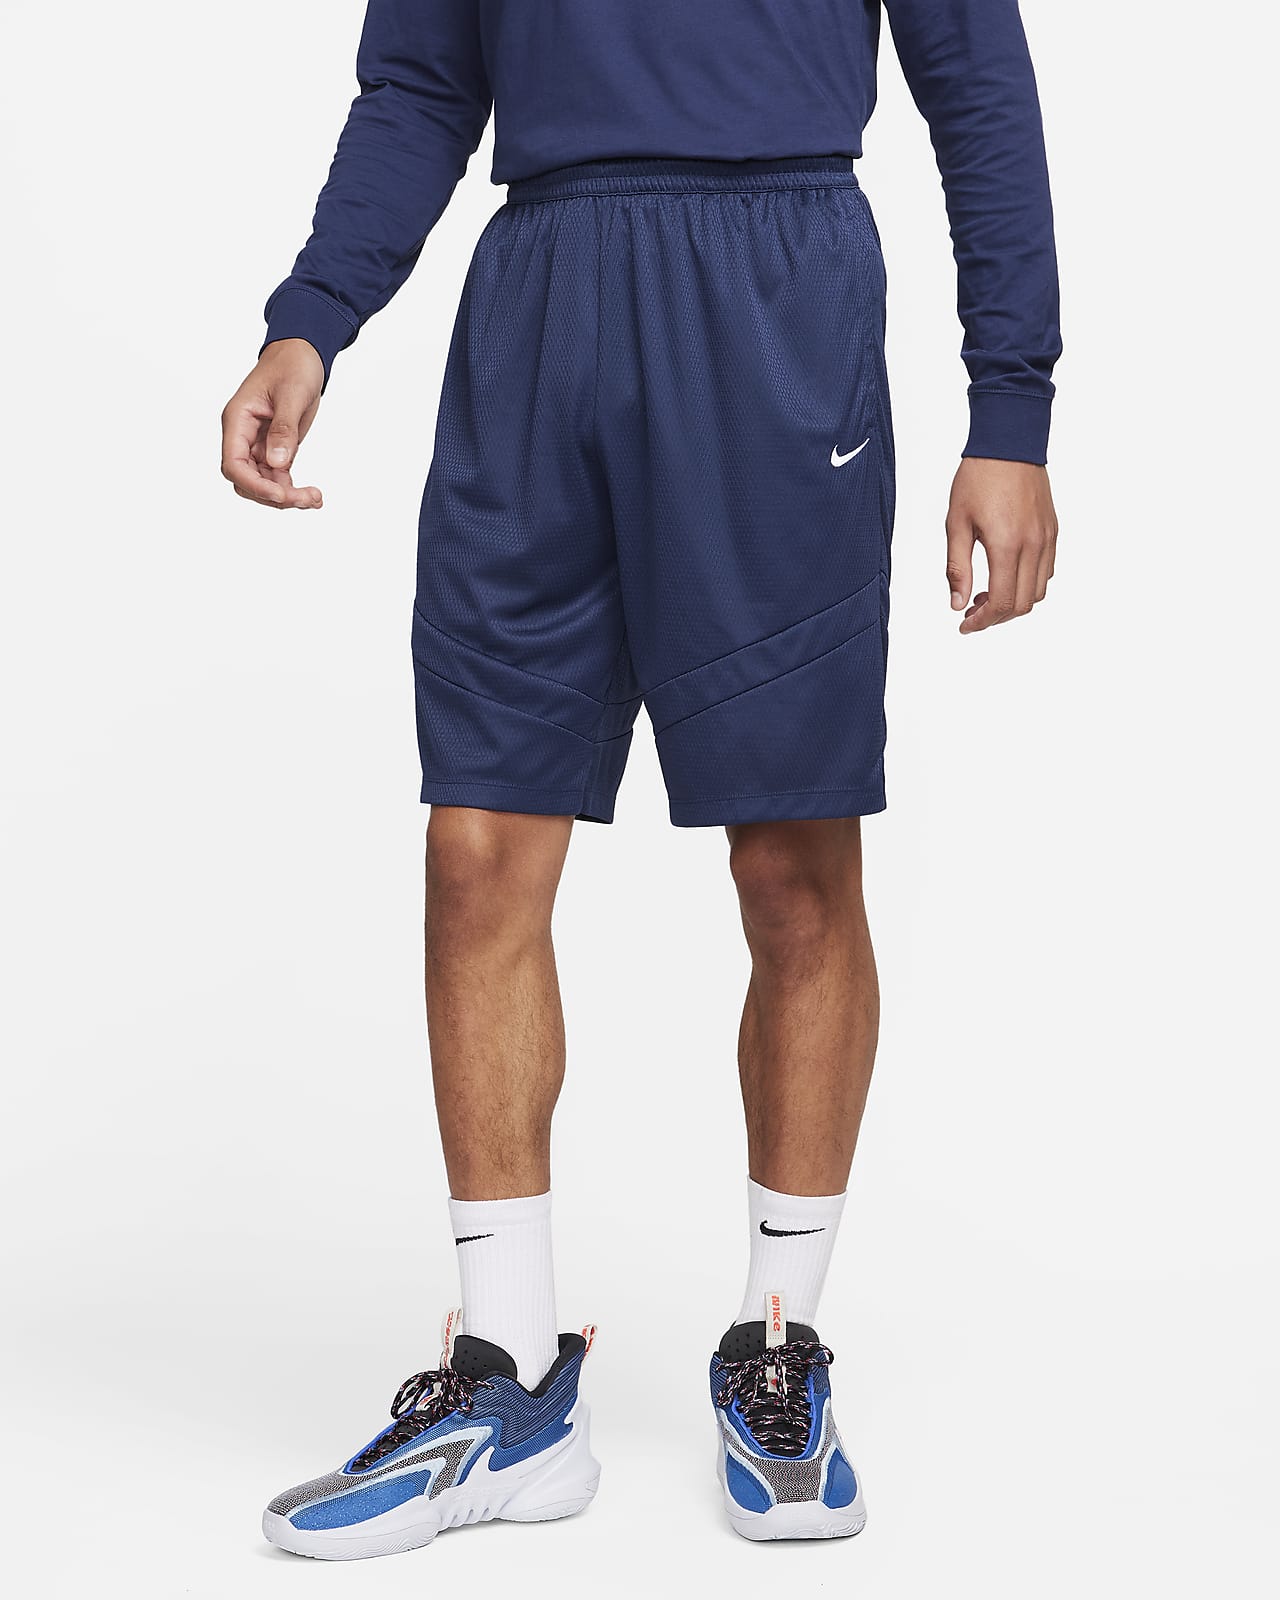 Nike Icon - Azul - Camiseta Baloncesto Hombre